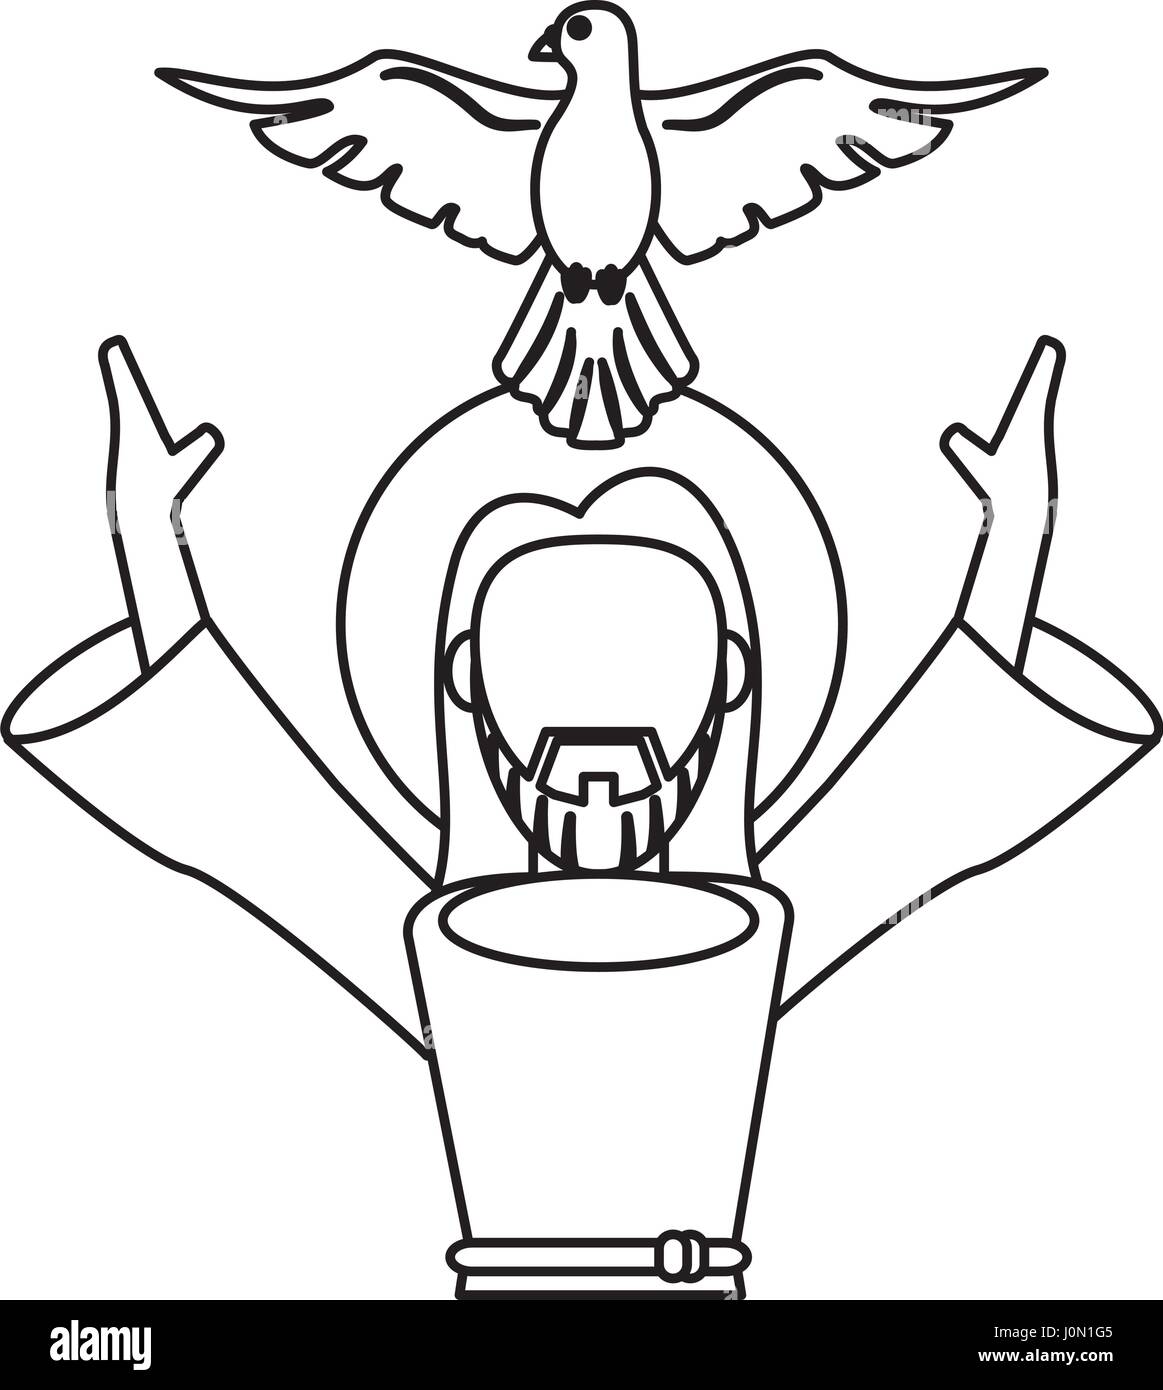 jesus christ holy spirit catholic symbol outline Stock Vector